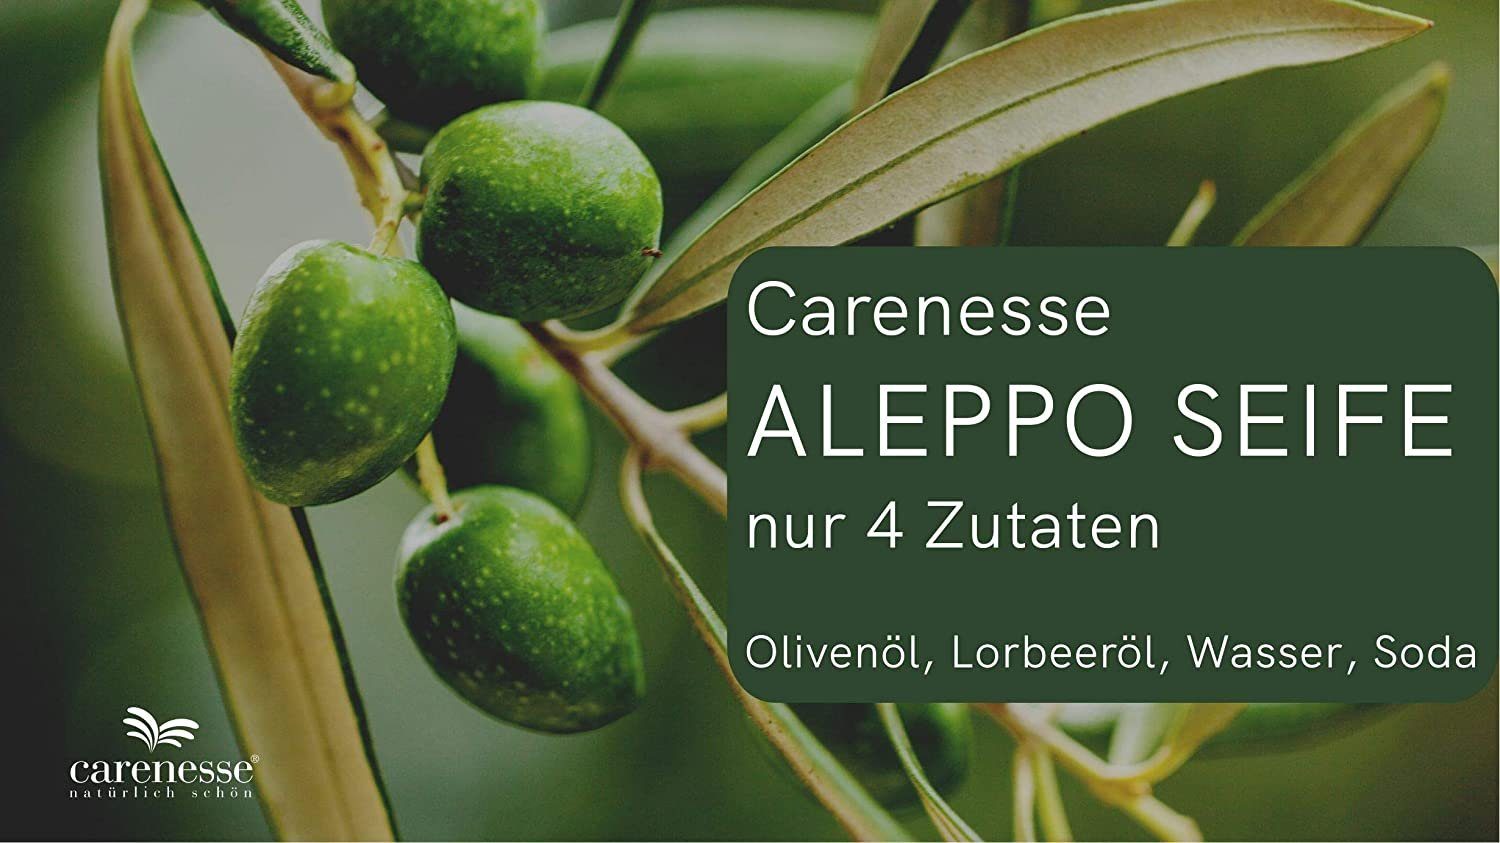 TESTSIEGER Original TOP 4 Olivenölseife, g Lorbeerölseife, 200 Paket Seifen-Set Aleppo-Seife, Carenesse Seifenstück x Naturseifen, Aleppo-Seife Alepposeife,